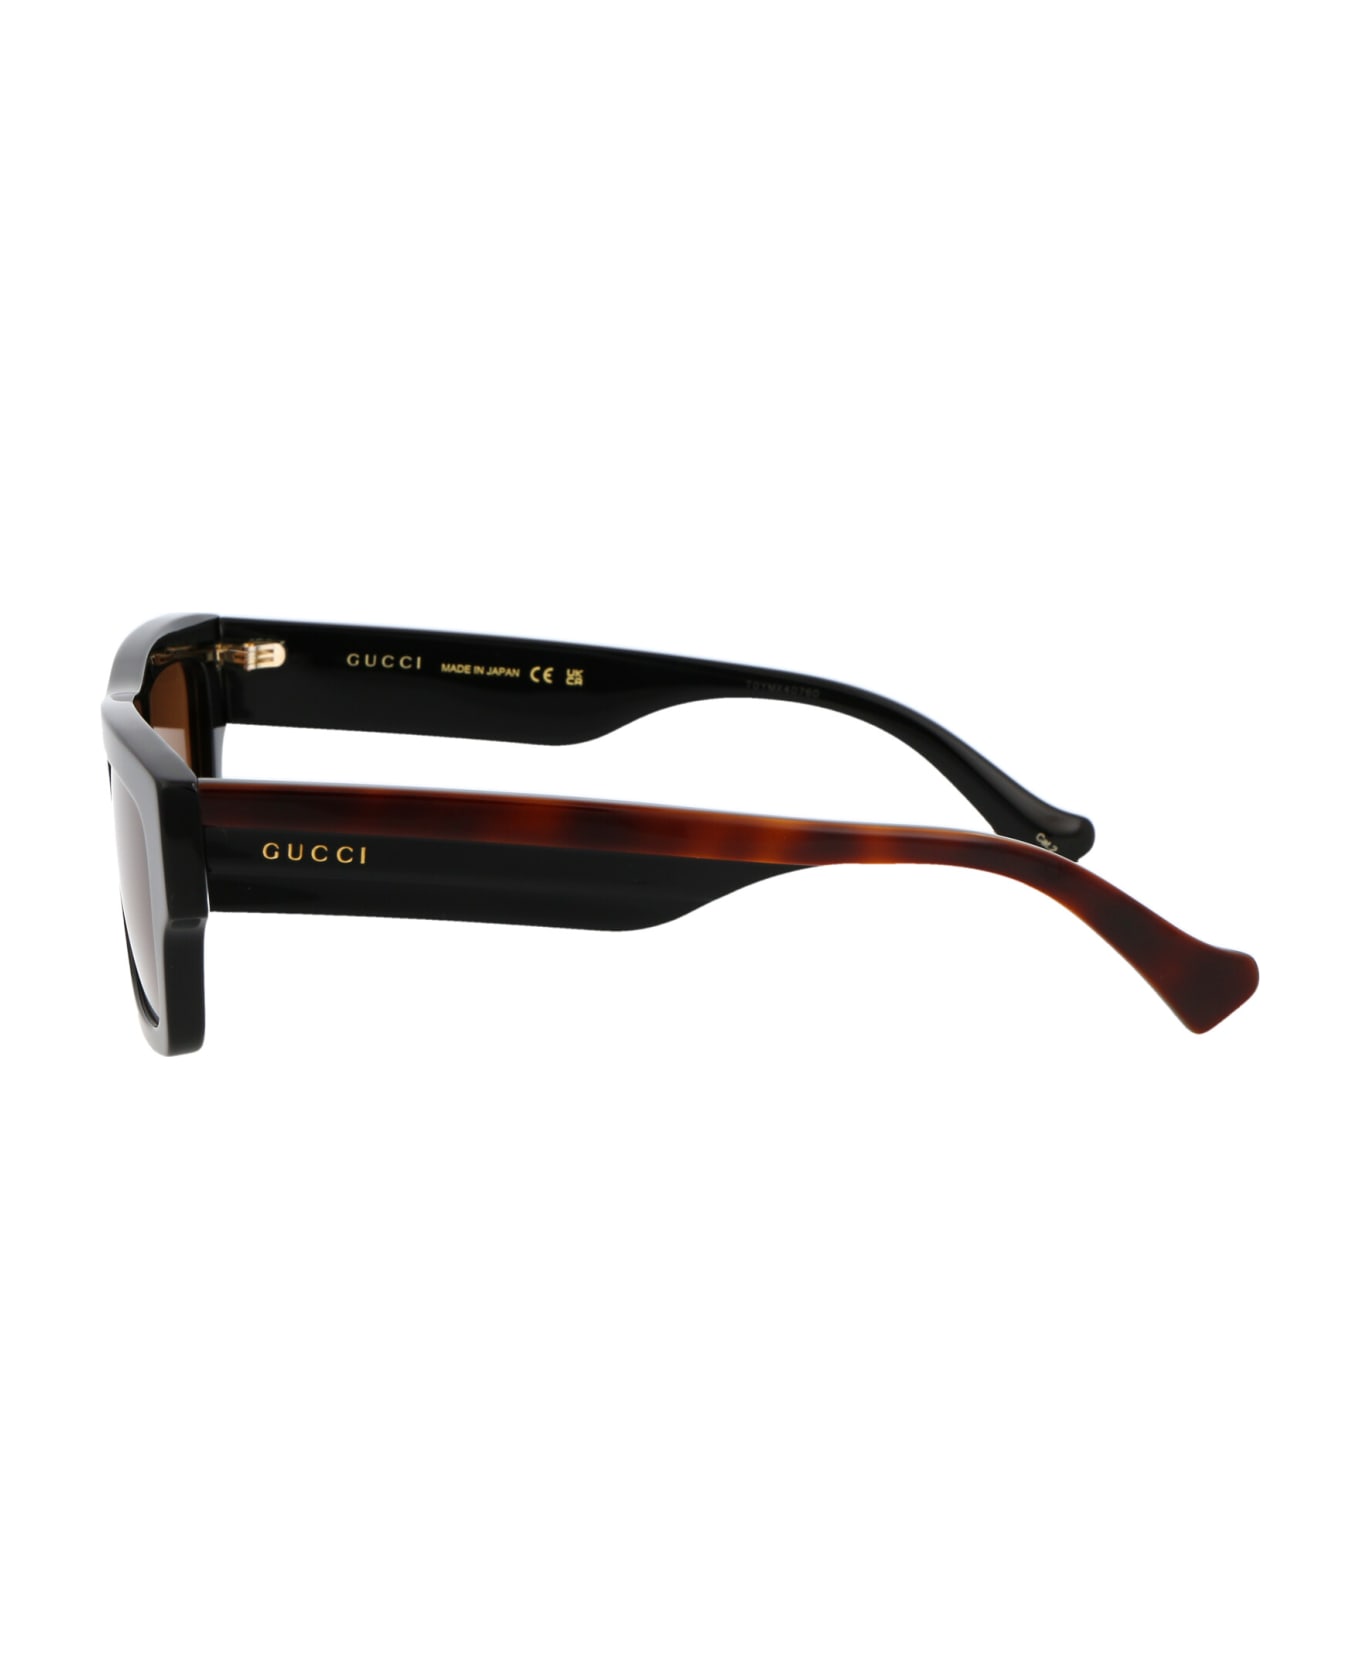 Gucci Eyewear Gg1301s Sunglasses - 004 BLACK HAVANA BROWN